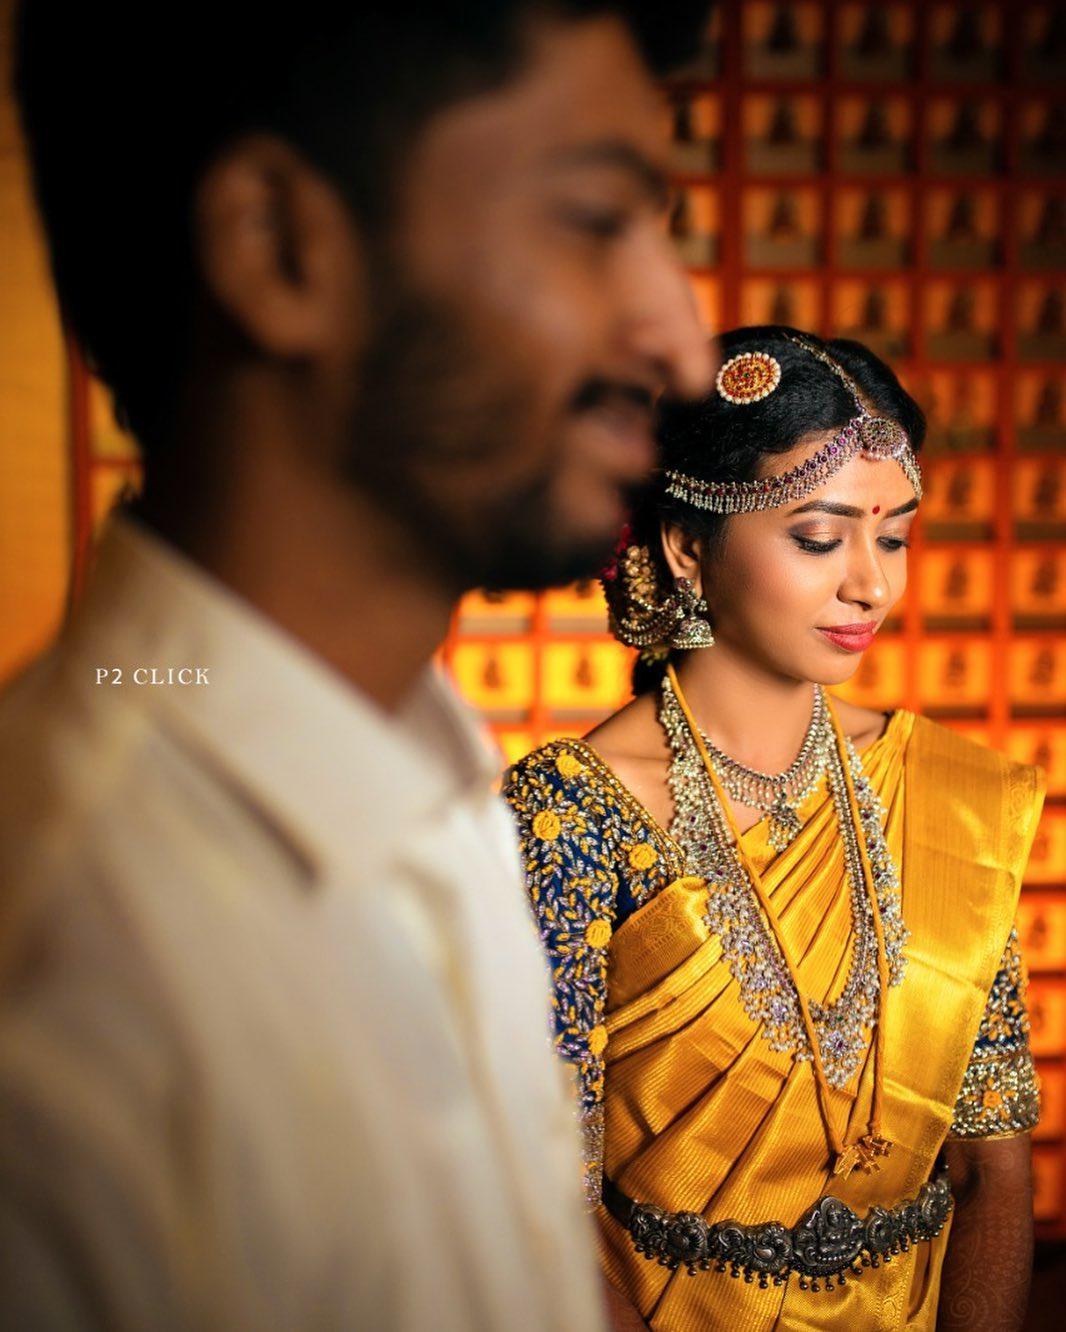 P2 Click Wedding Photographer, Chennai